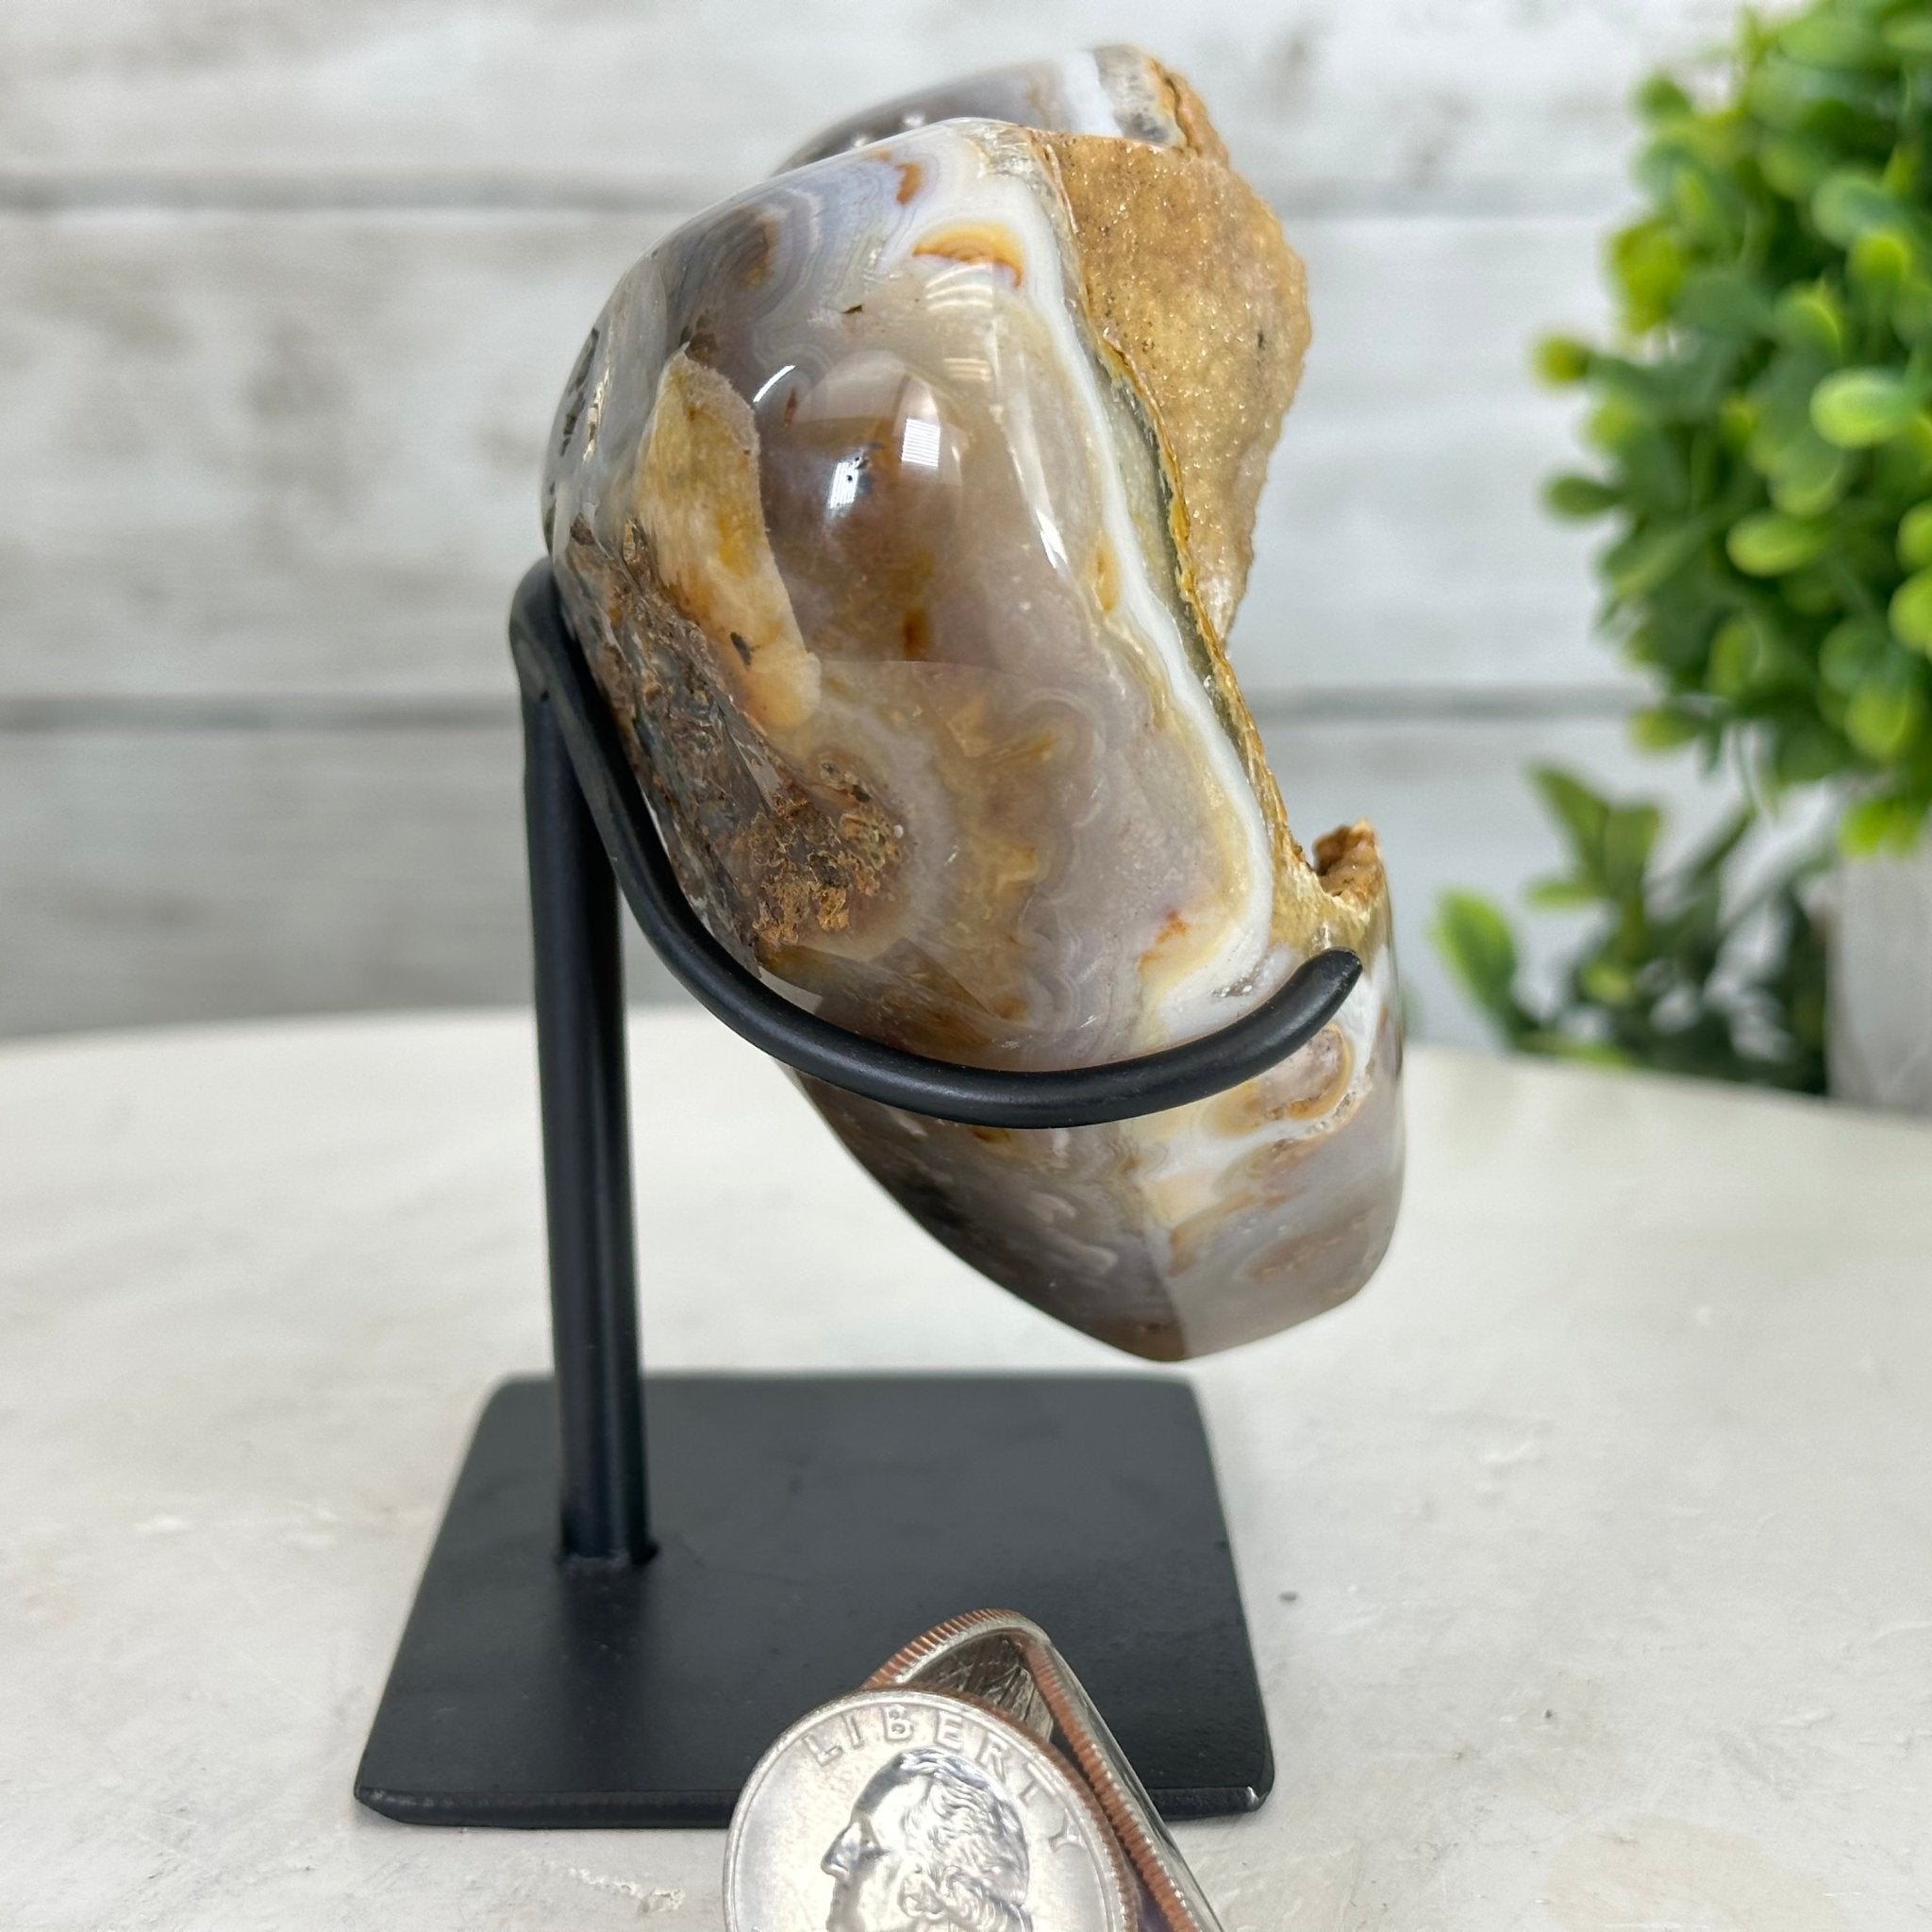 Polished Agate Heart Geode on a Metal Stand, 1.3 lbs & 4.25" Tall, Model #5468-0015 by Brazil Gems - Brazil GemsBrazil GemsPolished Agate Heart Geode on a Metal Stand, 1.3 lbs & 4.25" Tall, Model #5468-0015 by Brazil GemsHearts5468-0015